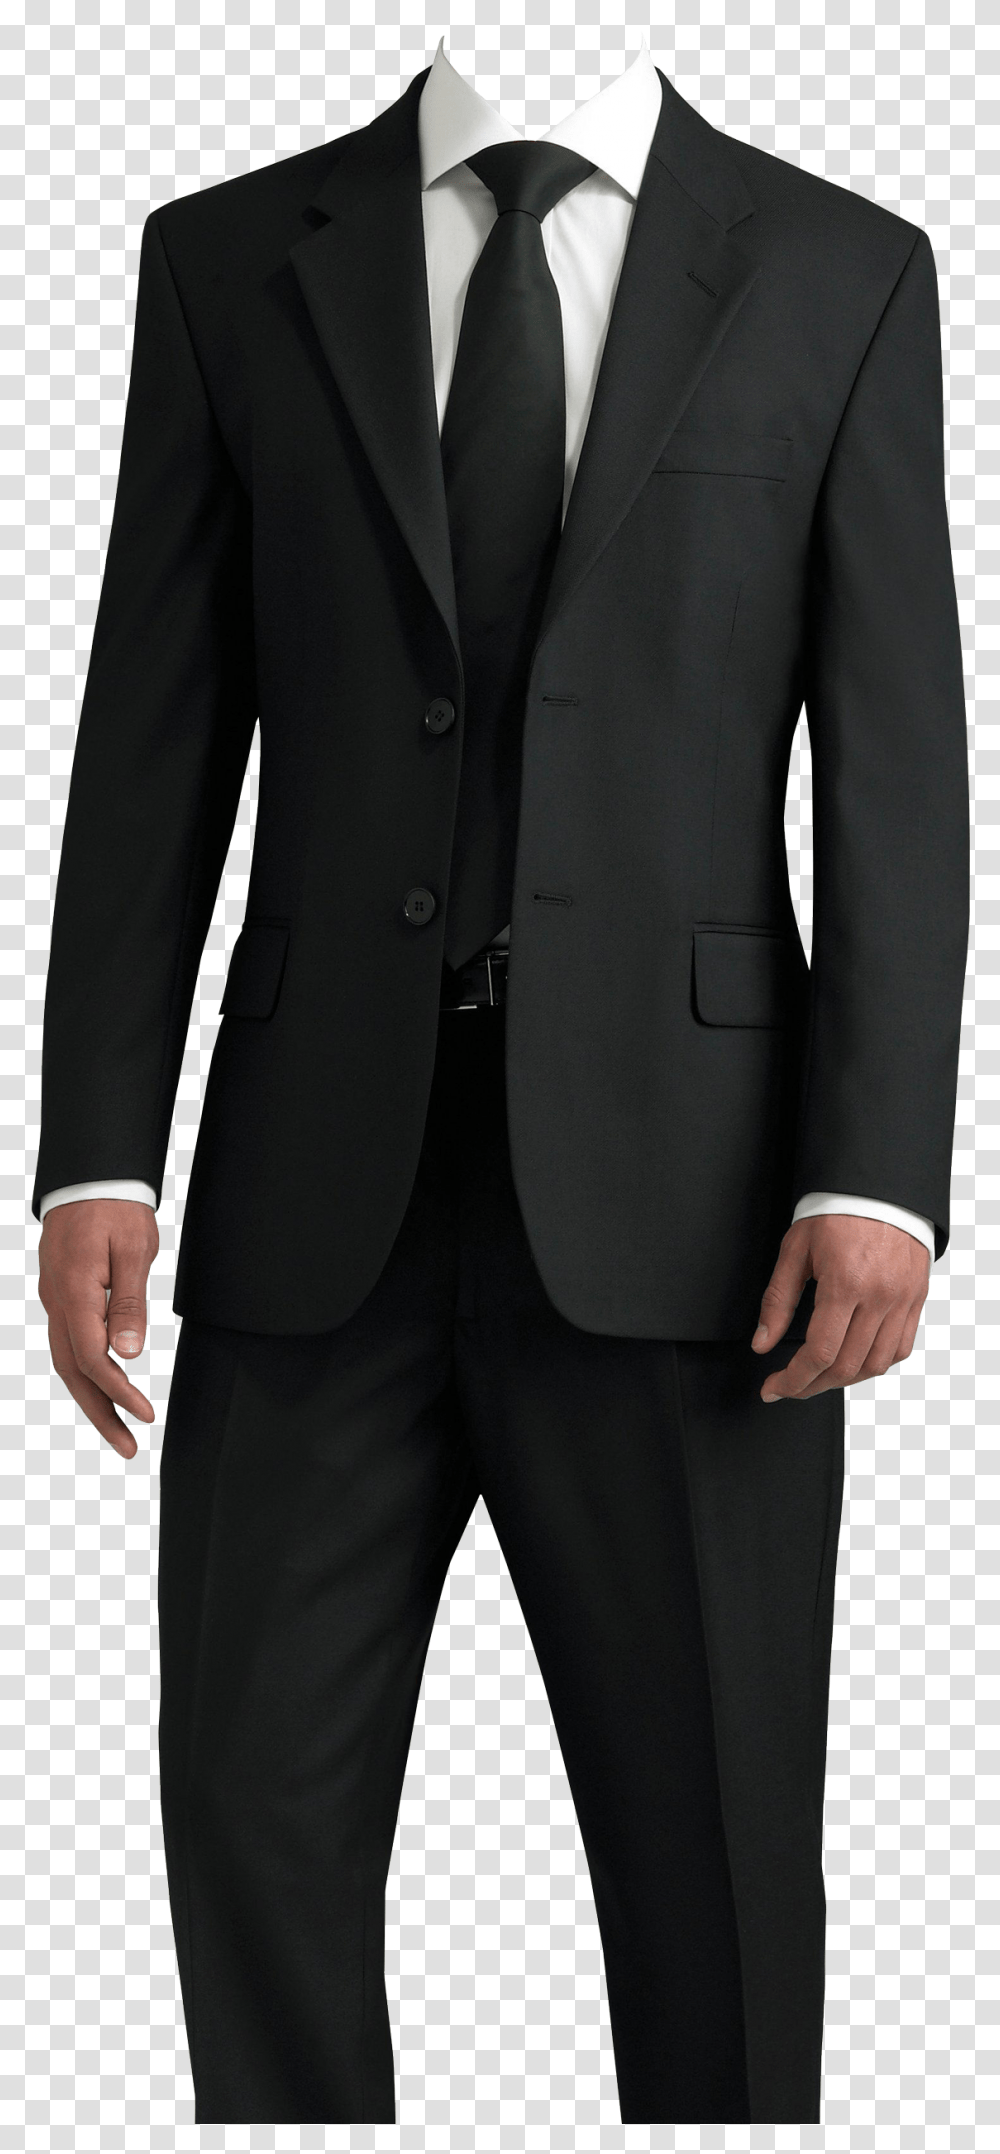 Black Man In Suit Image Suit For Photoshop, Apparel, Overcoat, Tuxedo Transparent Png